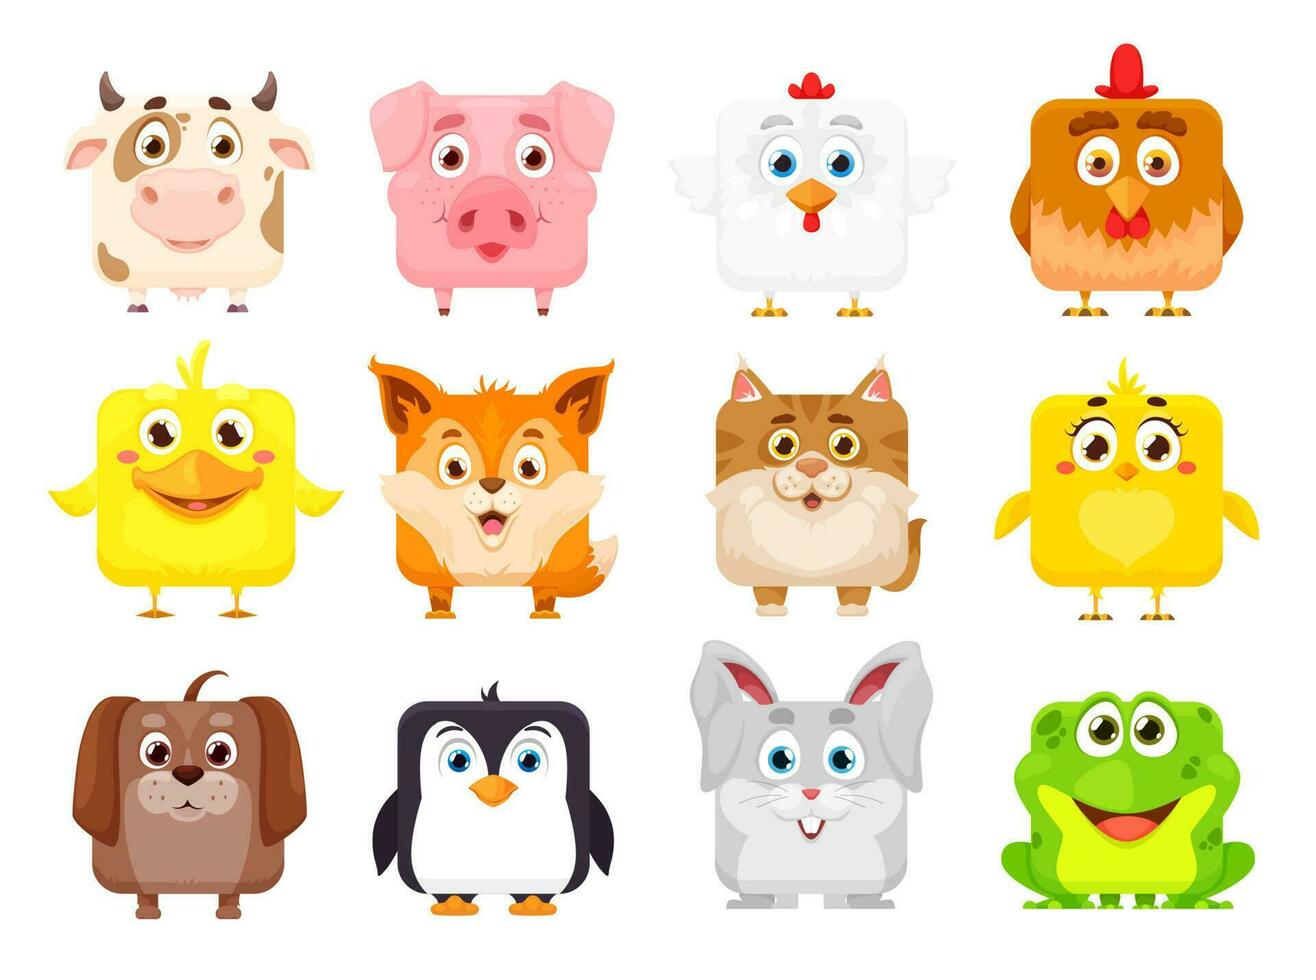 tekenfilm kawaii plein dier gezichten, schattig kinderen huisdieren vector